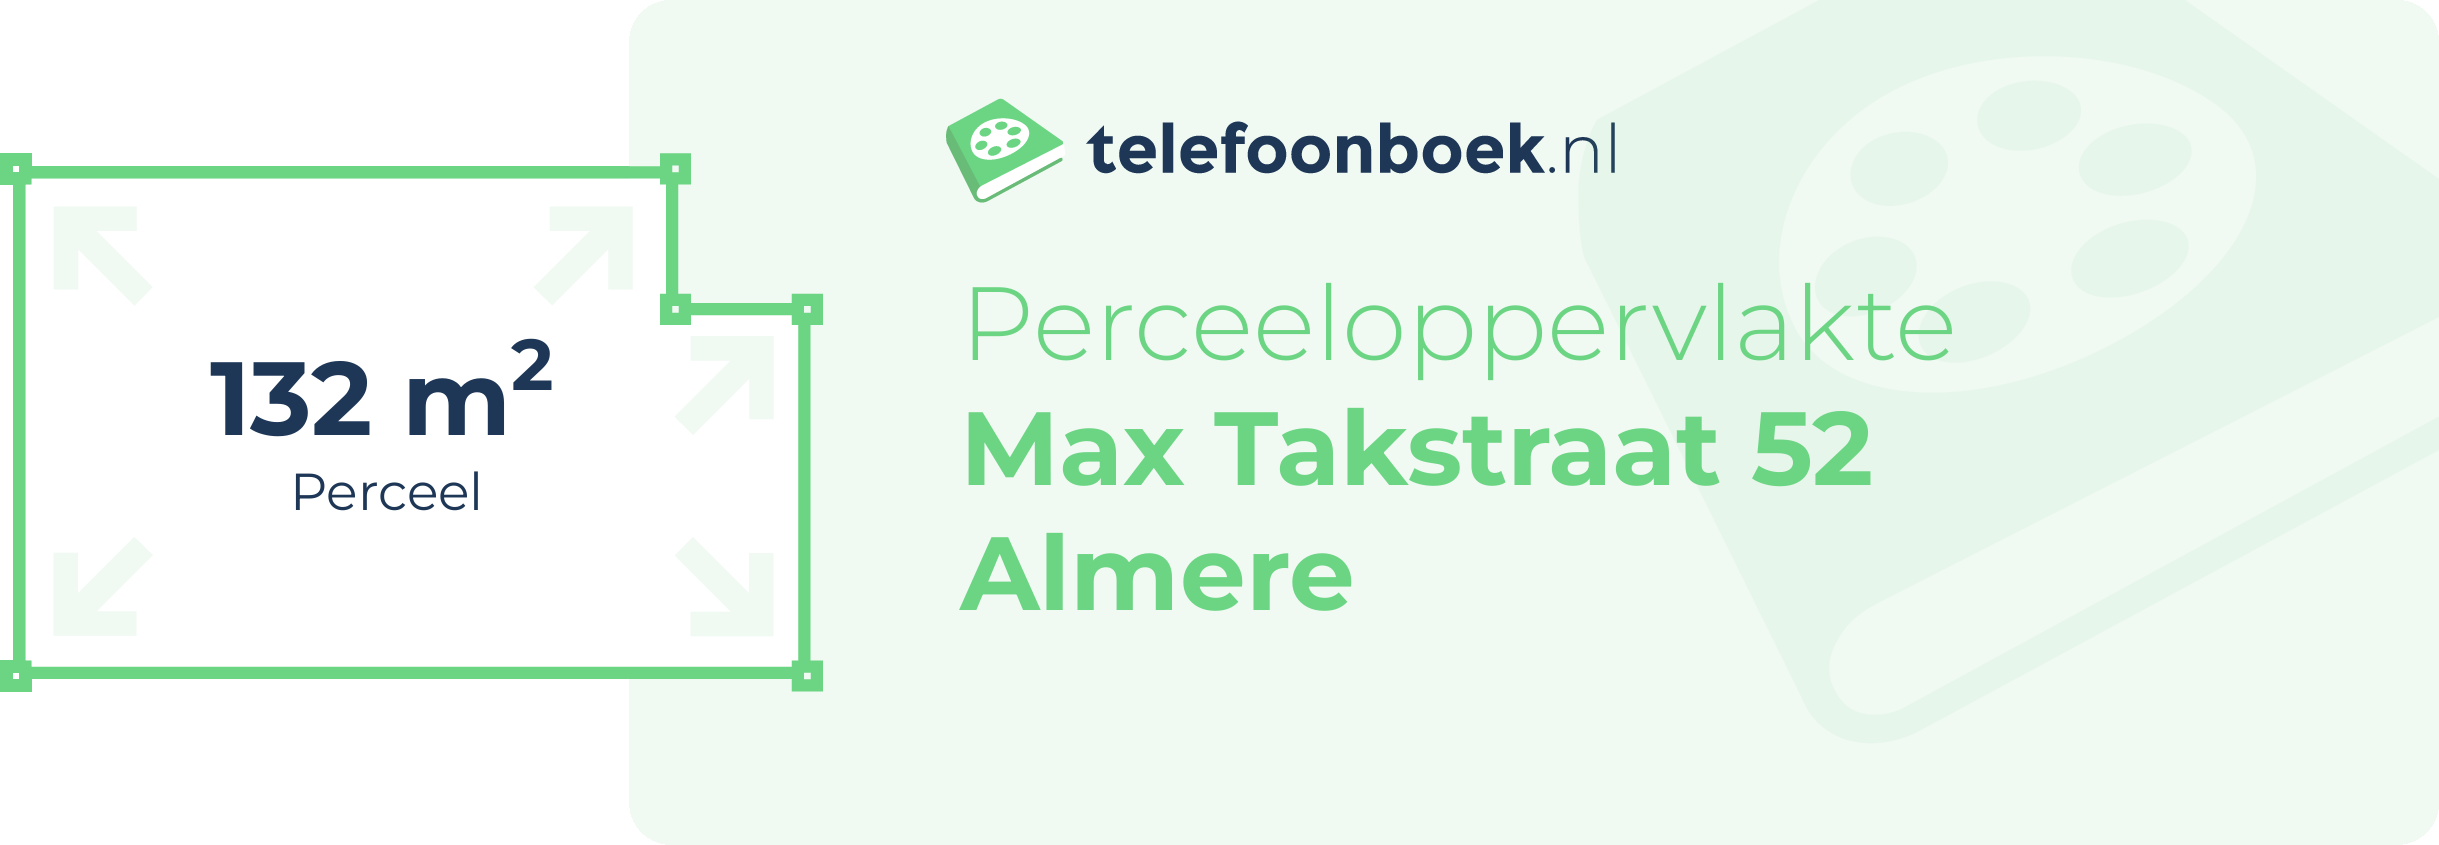 Perceeloppervlakte Max Takstraat 52 Almere